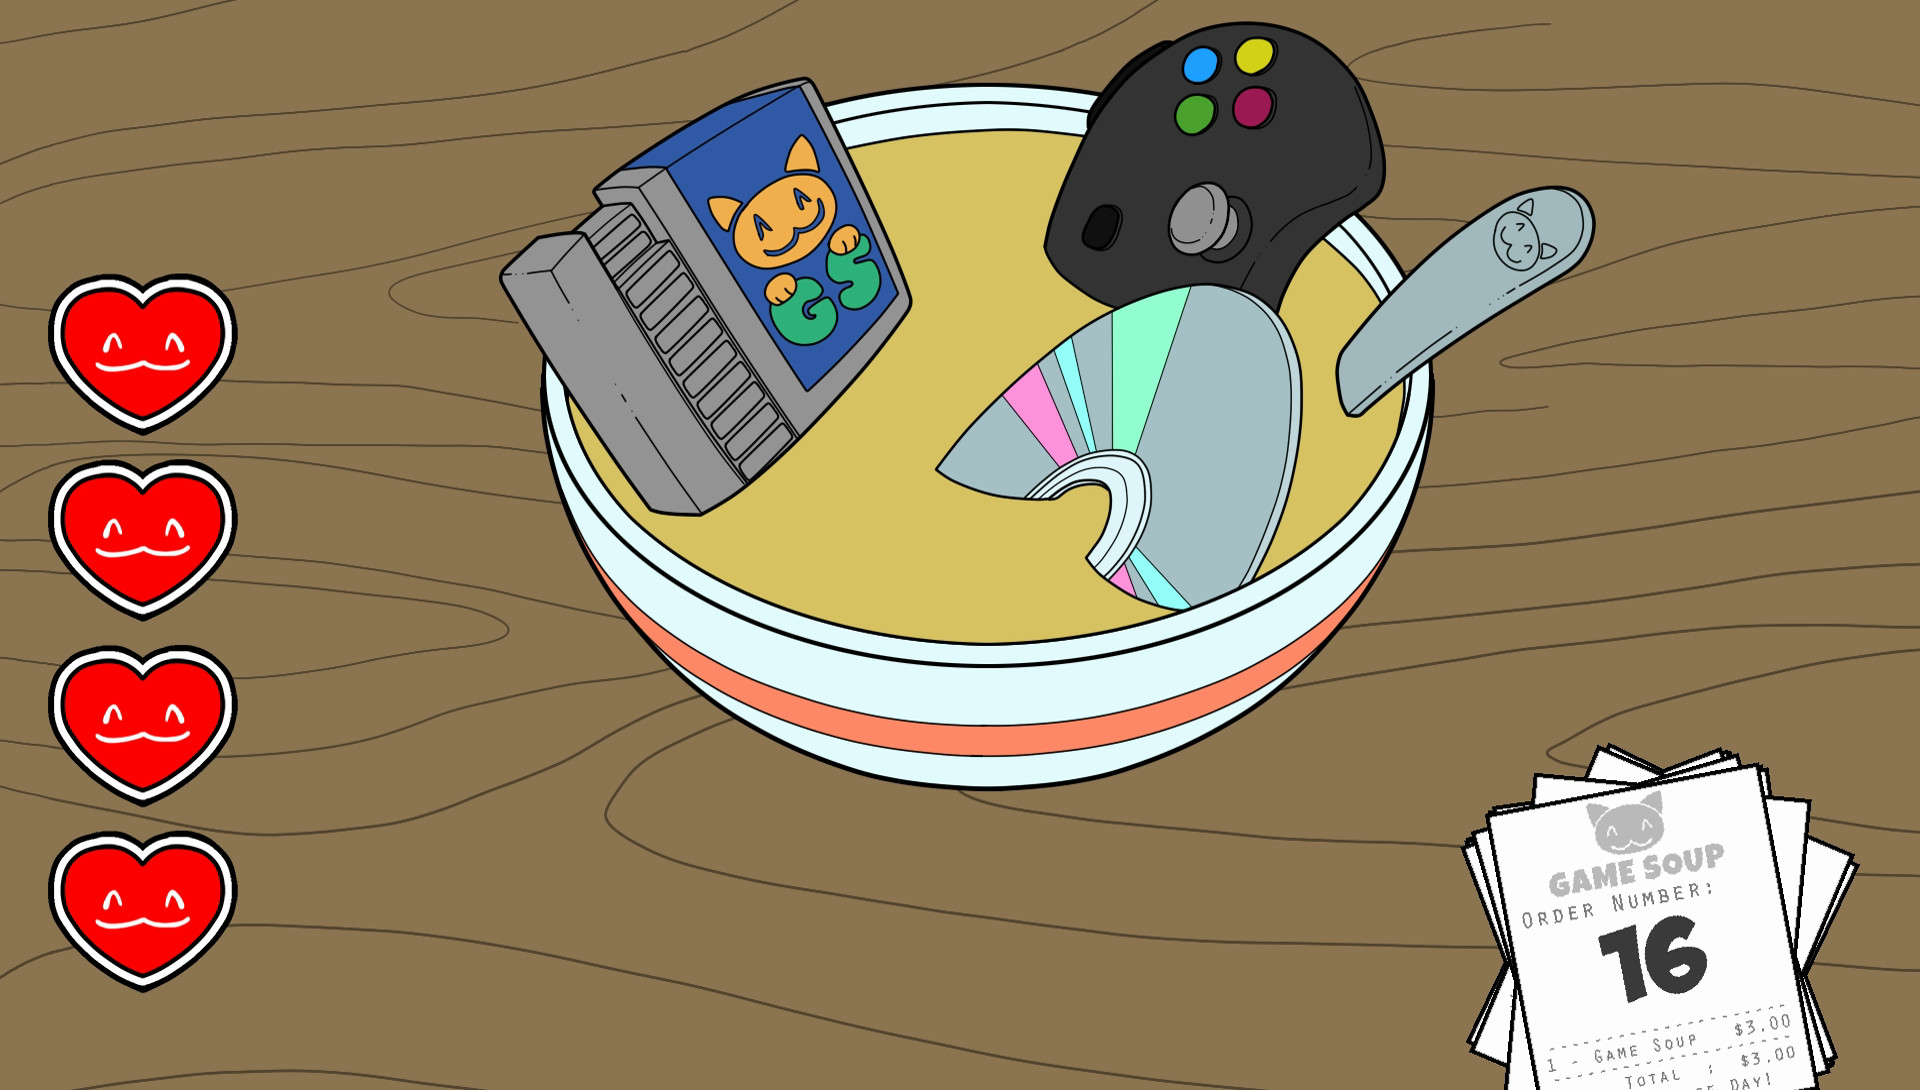 Game Soup screenshot